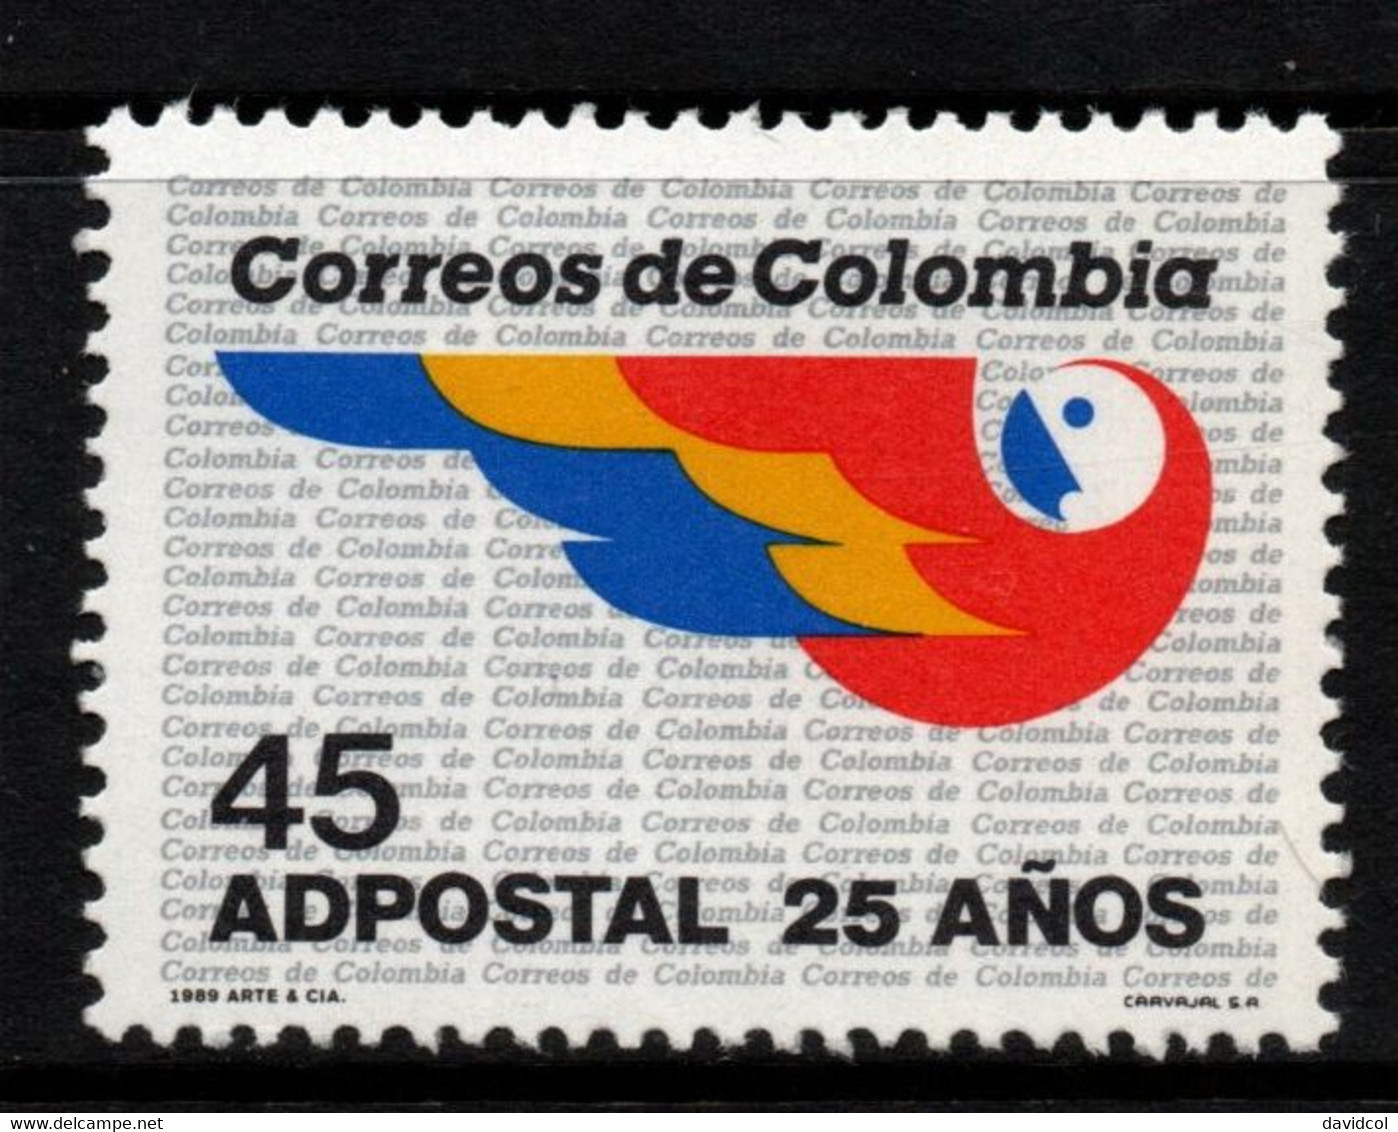 07- KOLUMBIEN - 1989 - MI#:1750 - MNH- “ADPOSTAL” NATIONAL MAIL COMPANY, 25 YEARS - Colombie